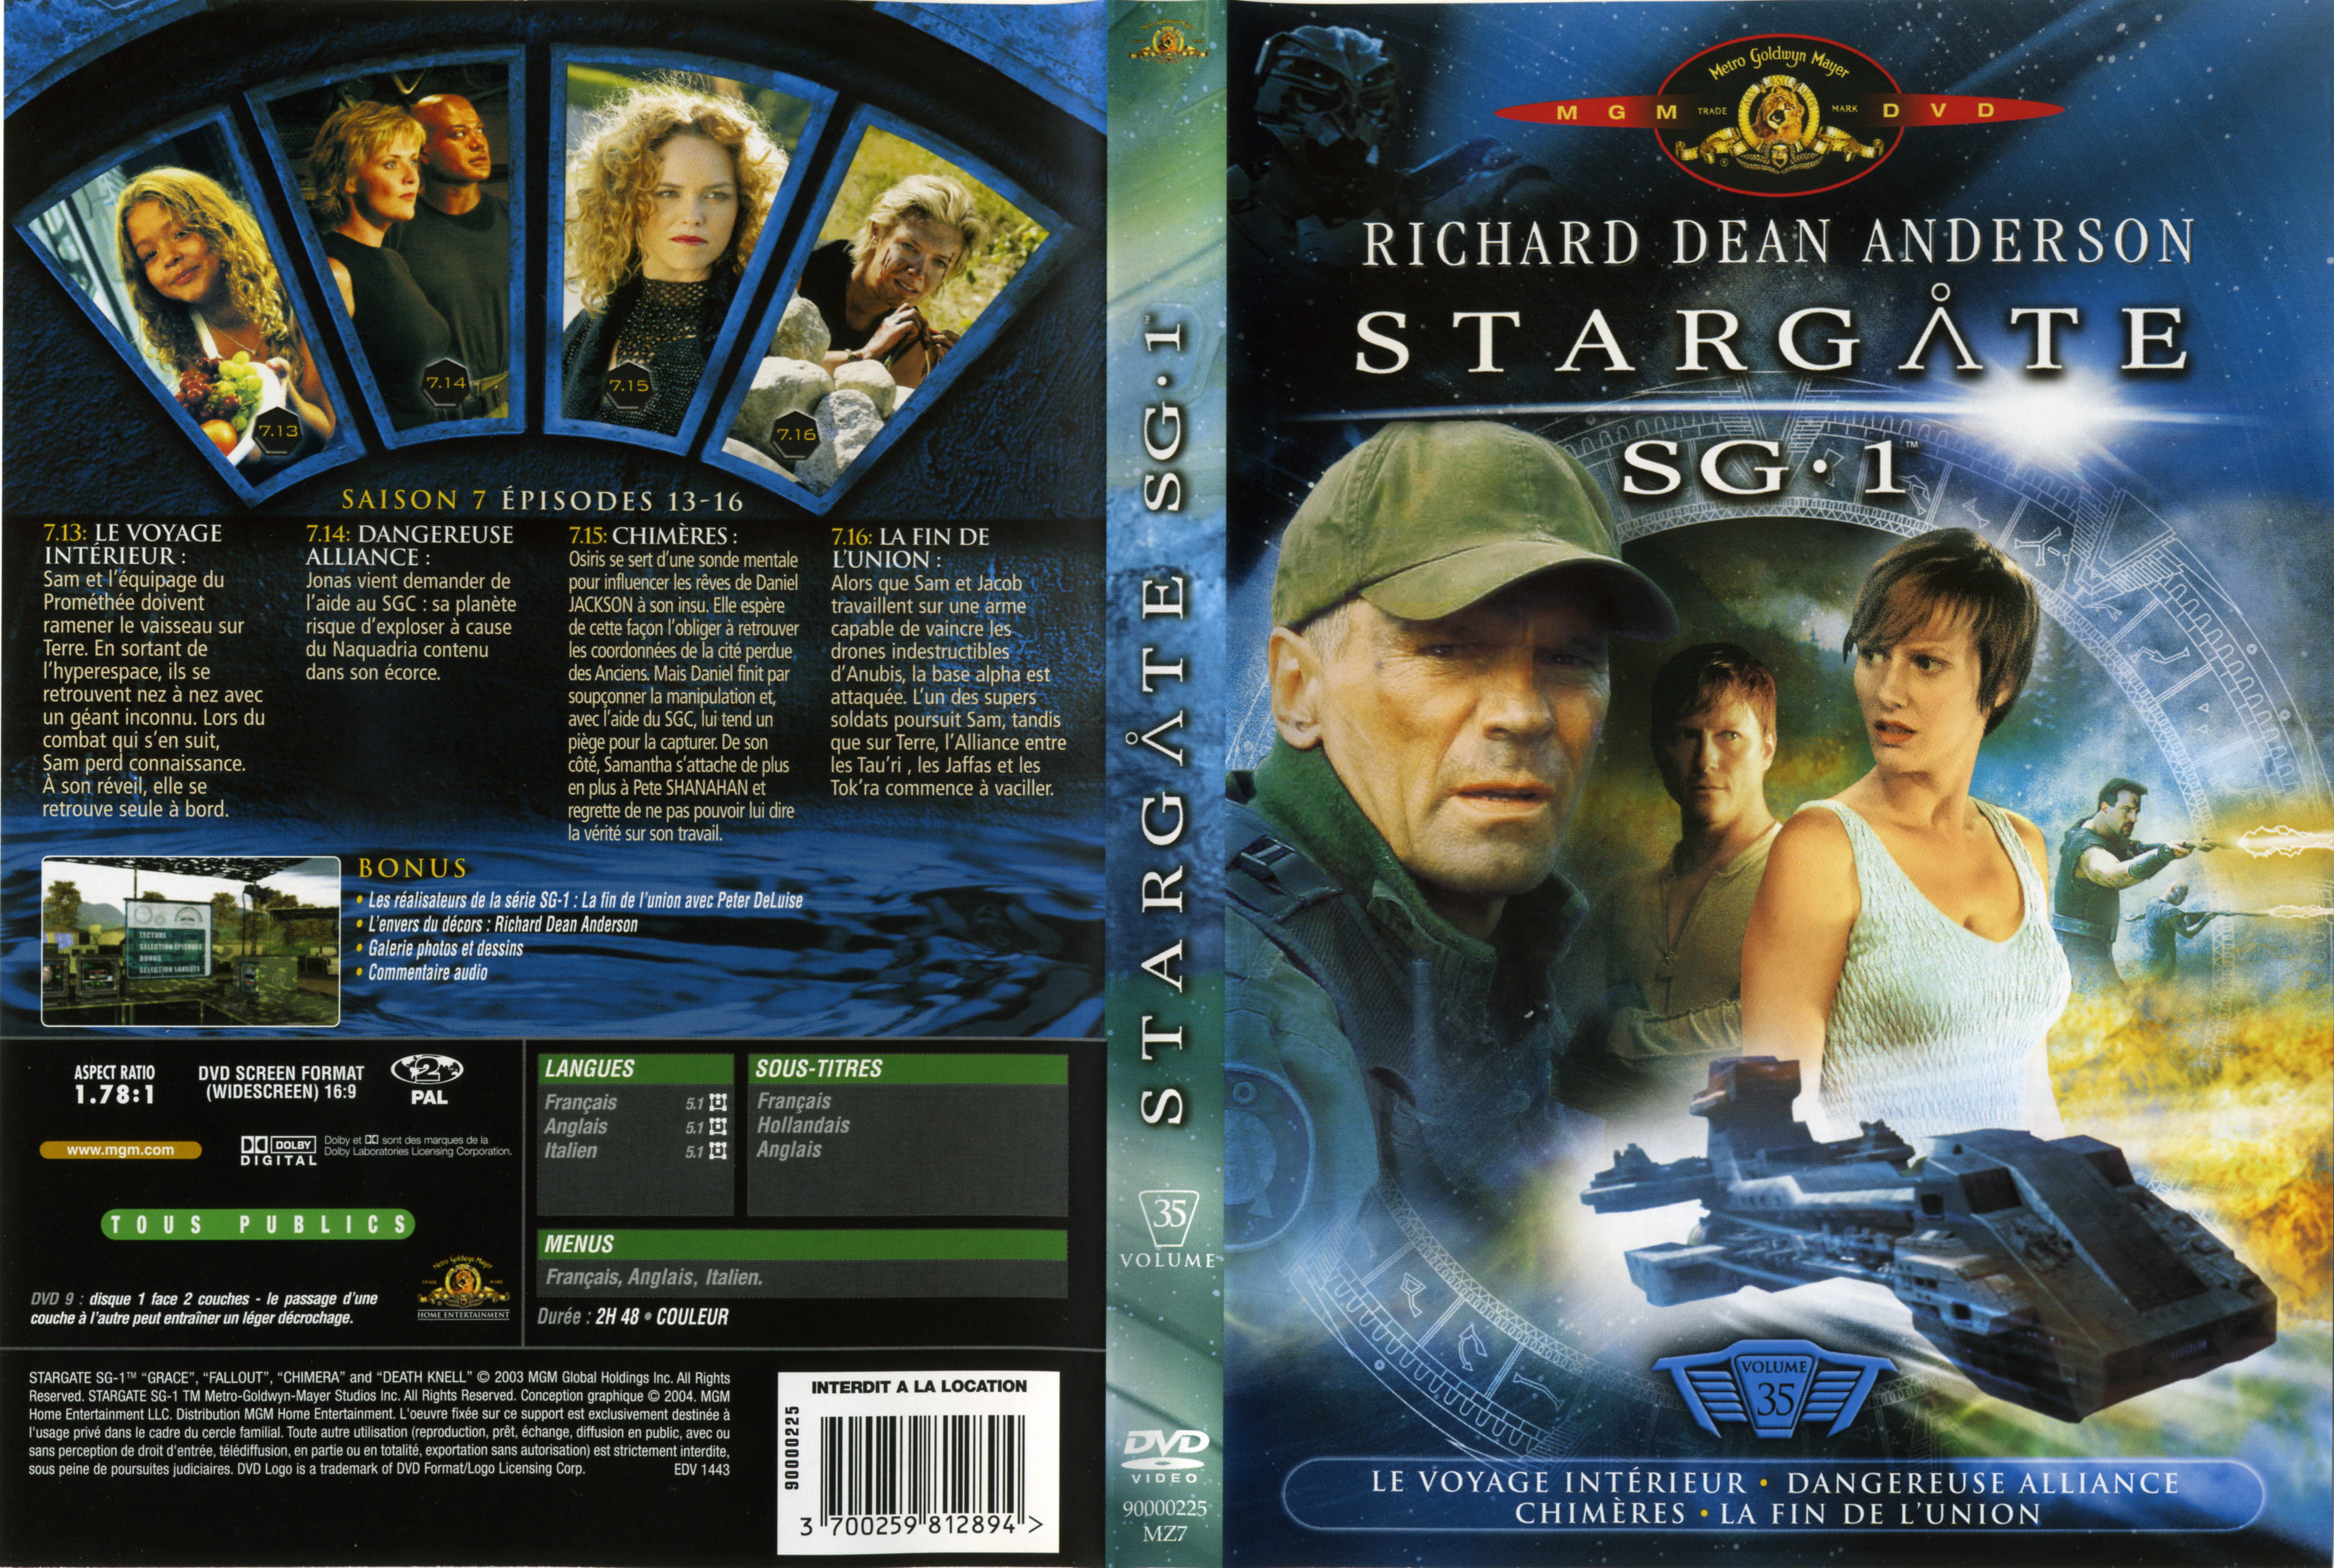 Jaquette DVD Stargate SG1 vol 35